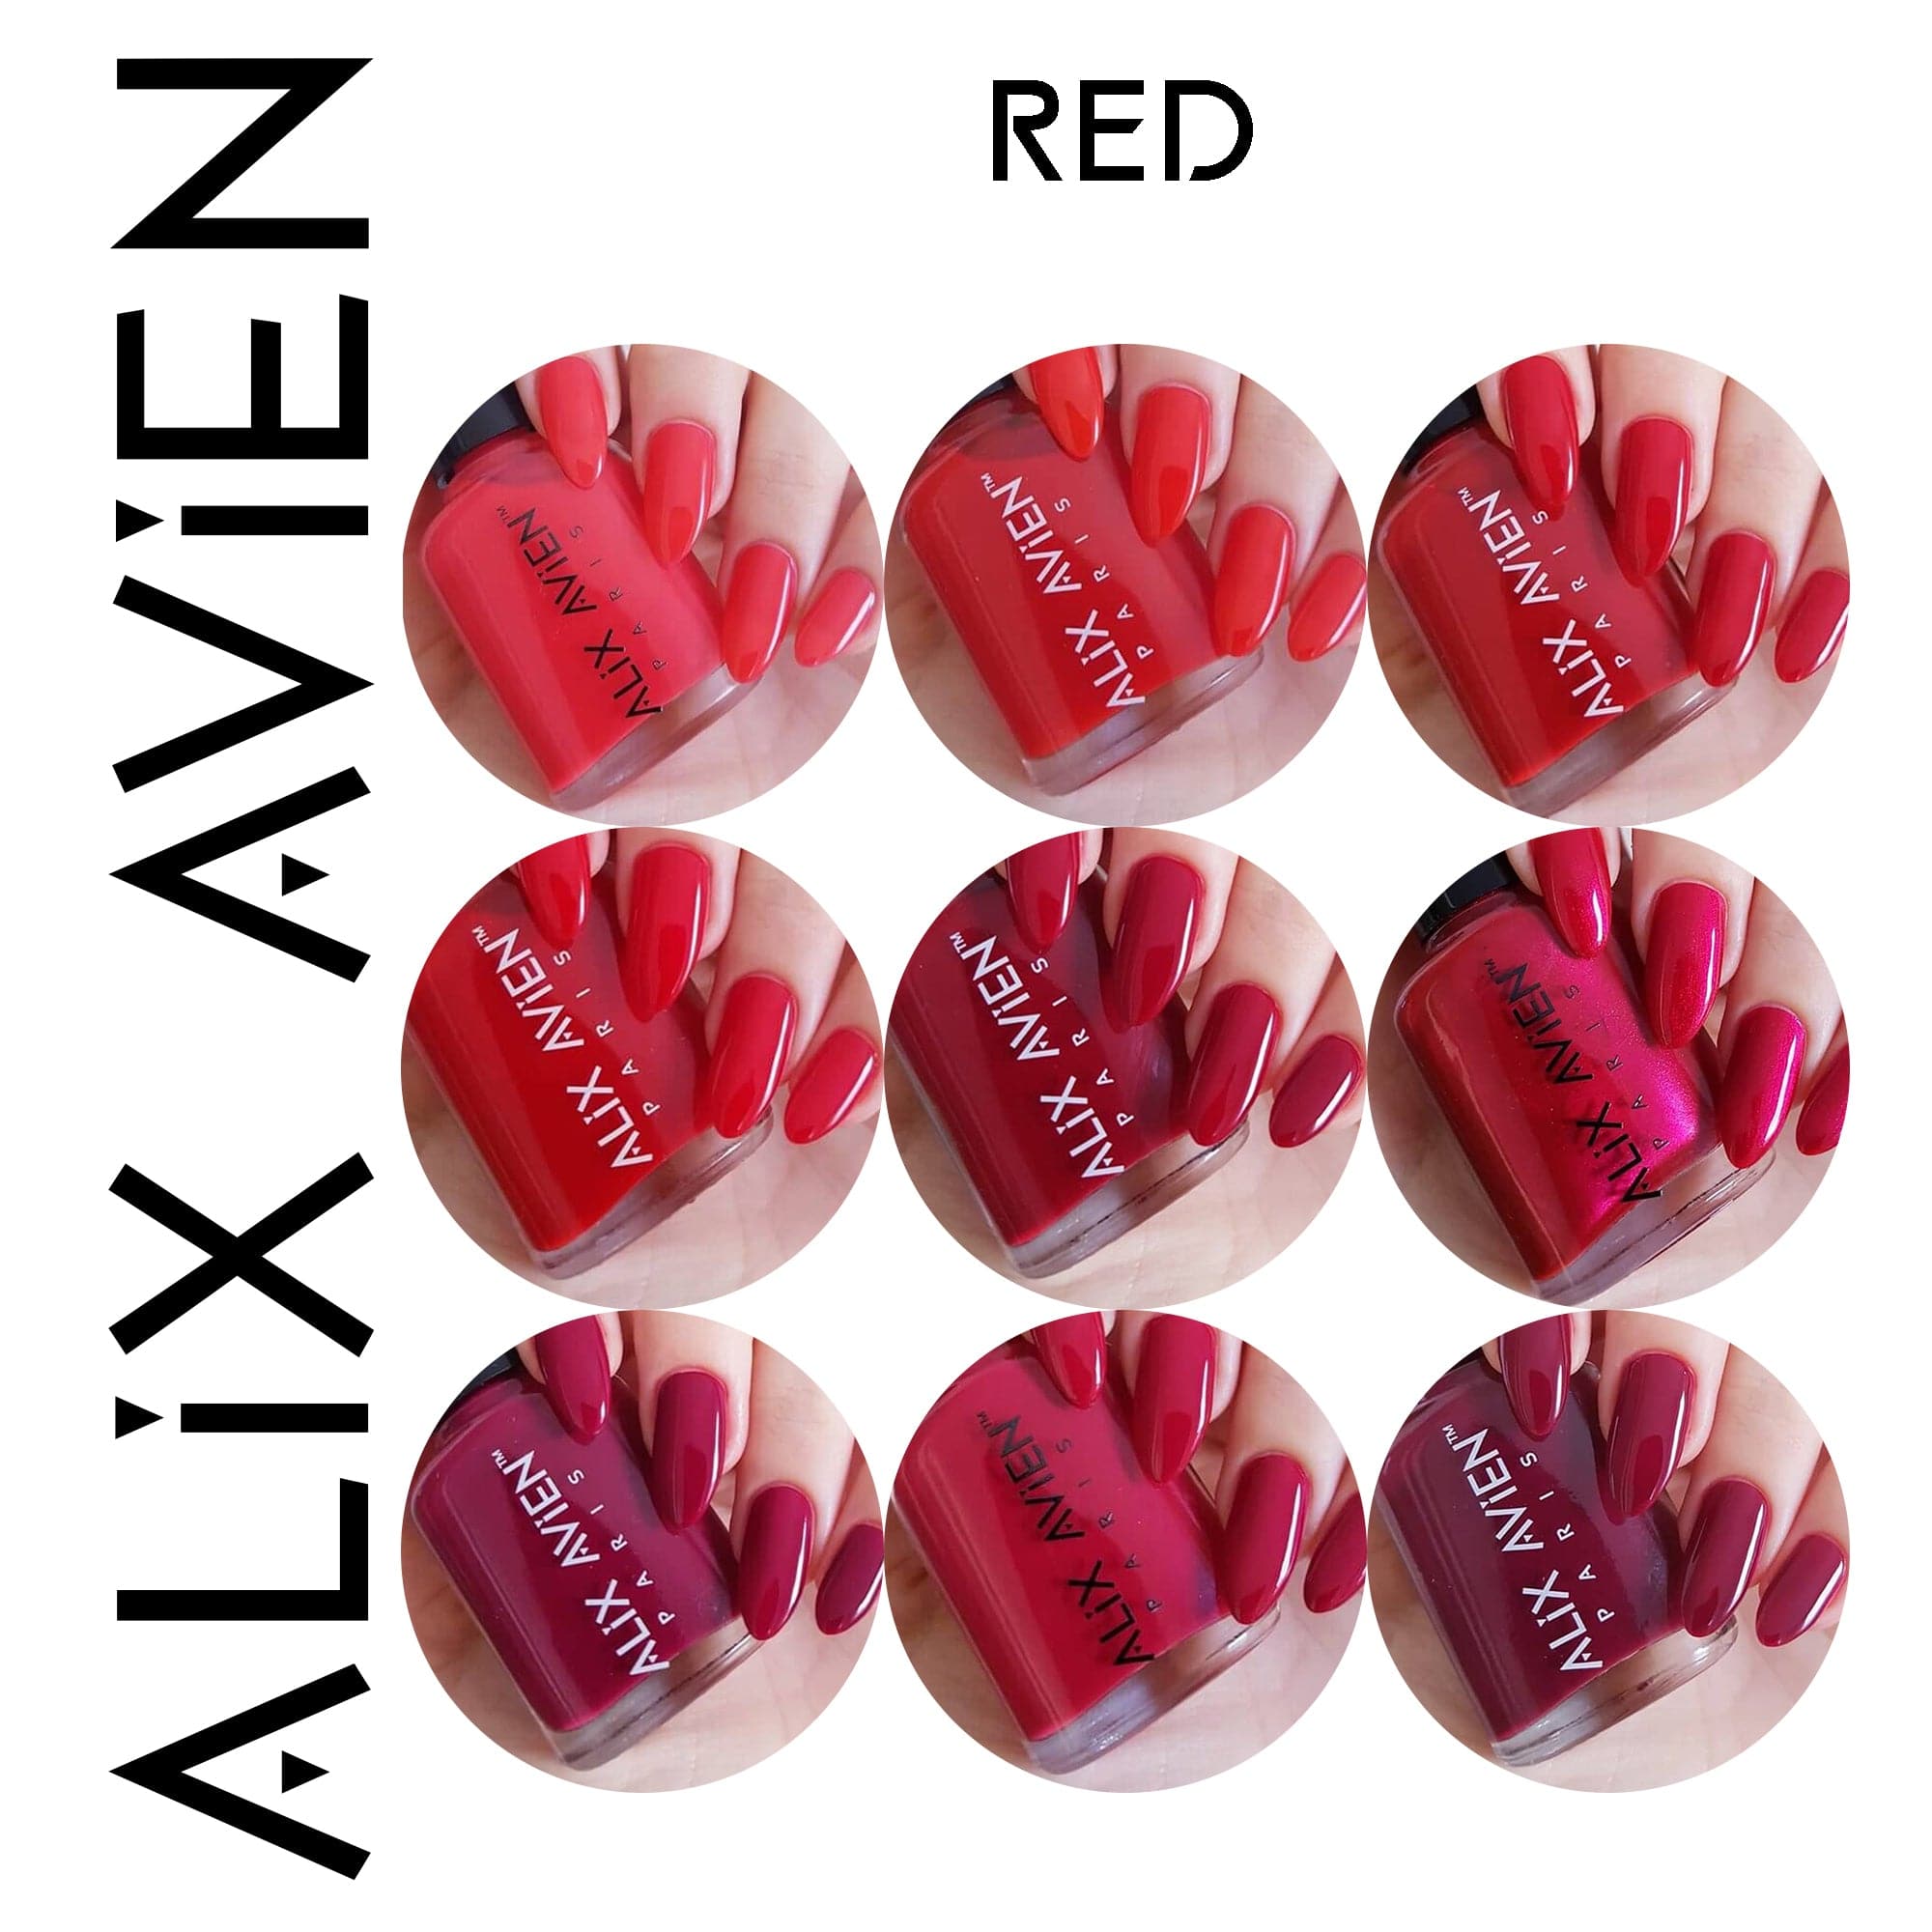 Alix Avien - Nail Polish No.13 (Light Red)